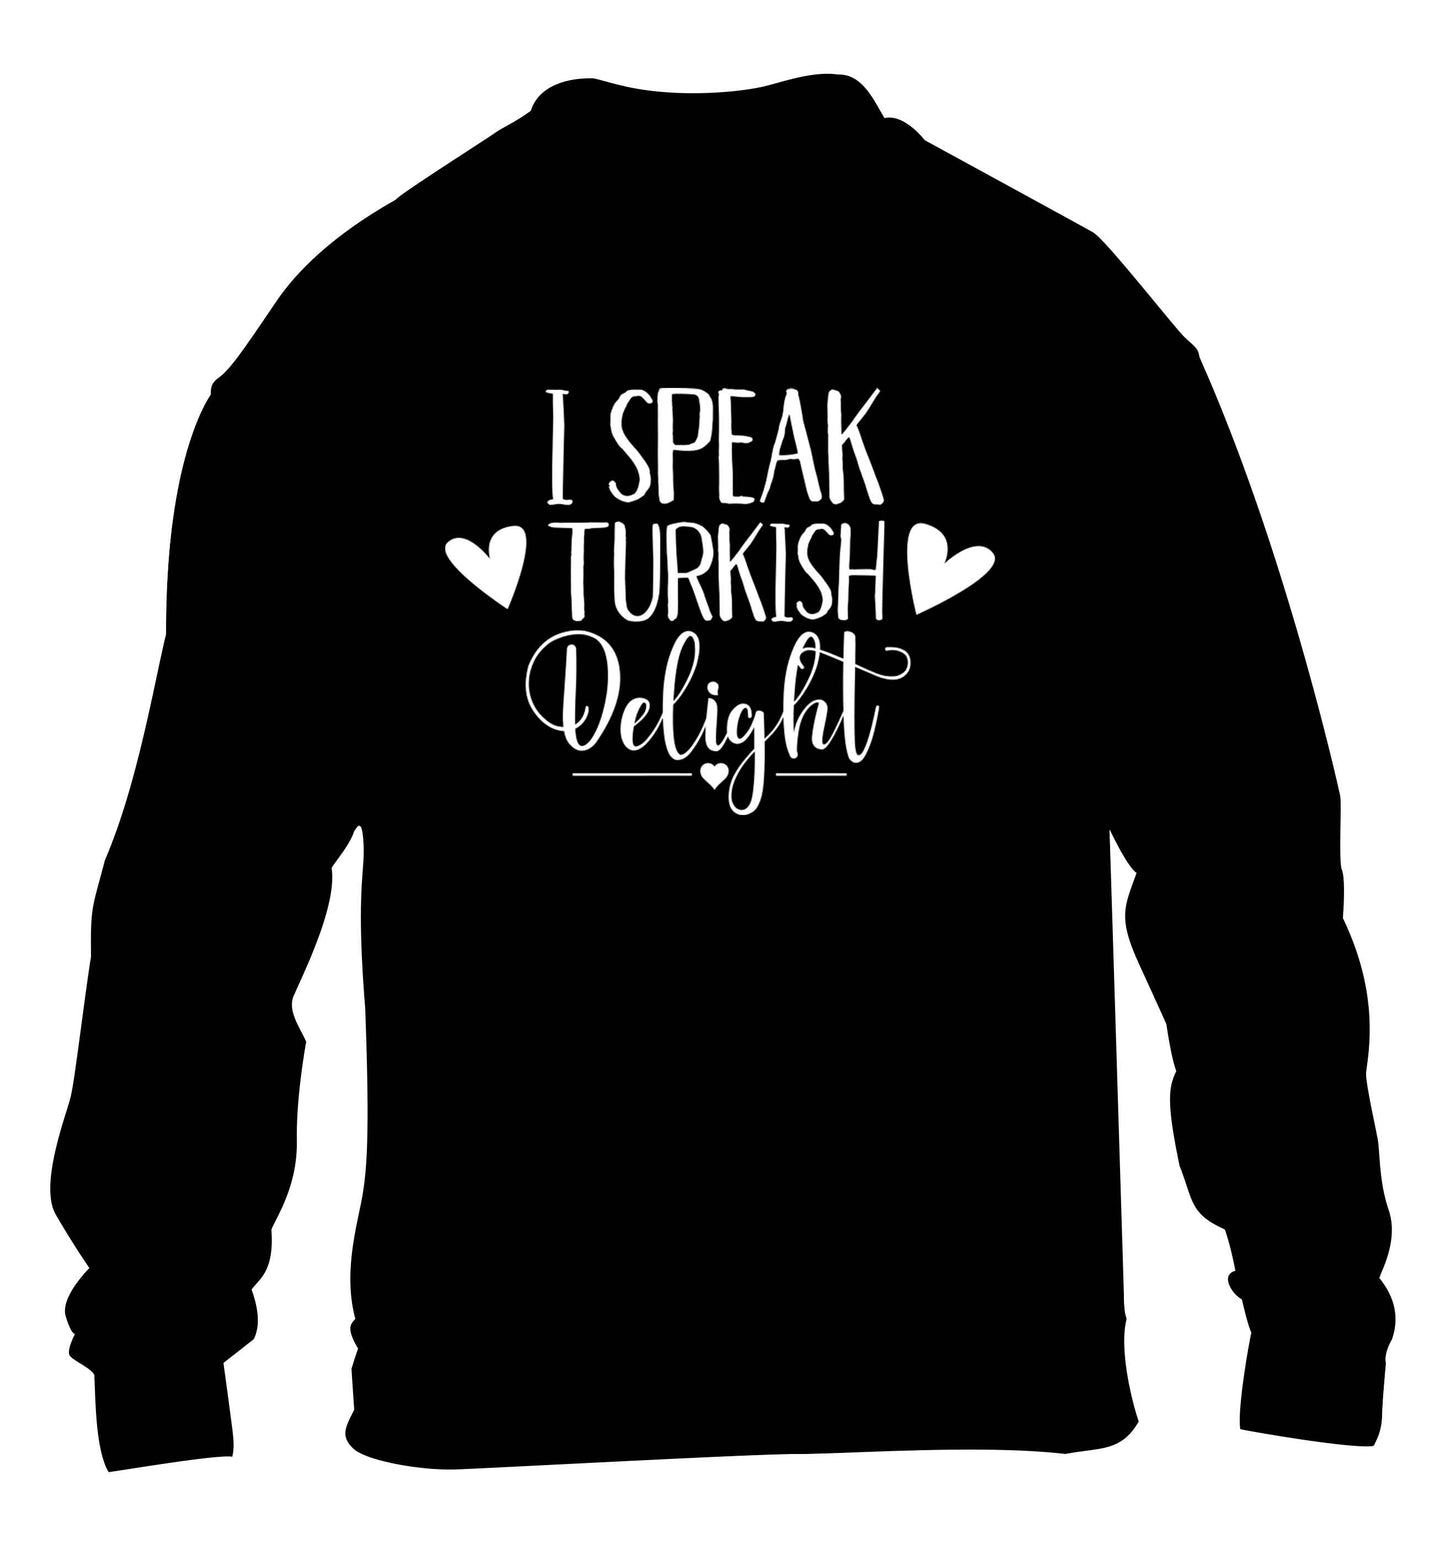 I speak turkish...delight children's black sweater 12-13 Years